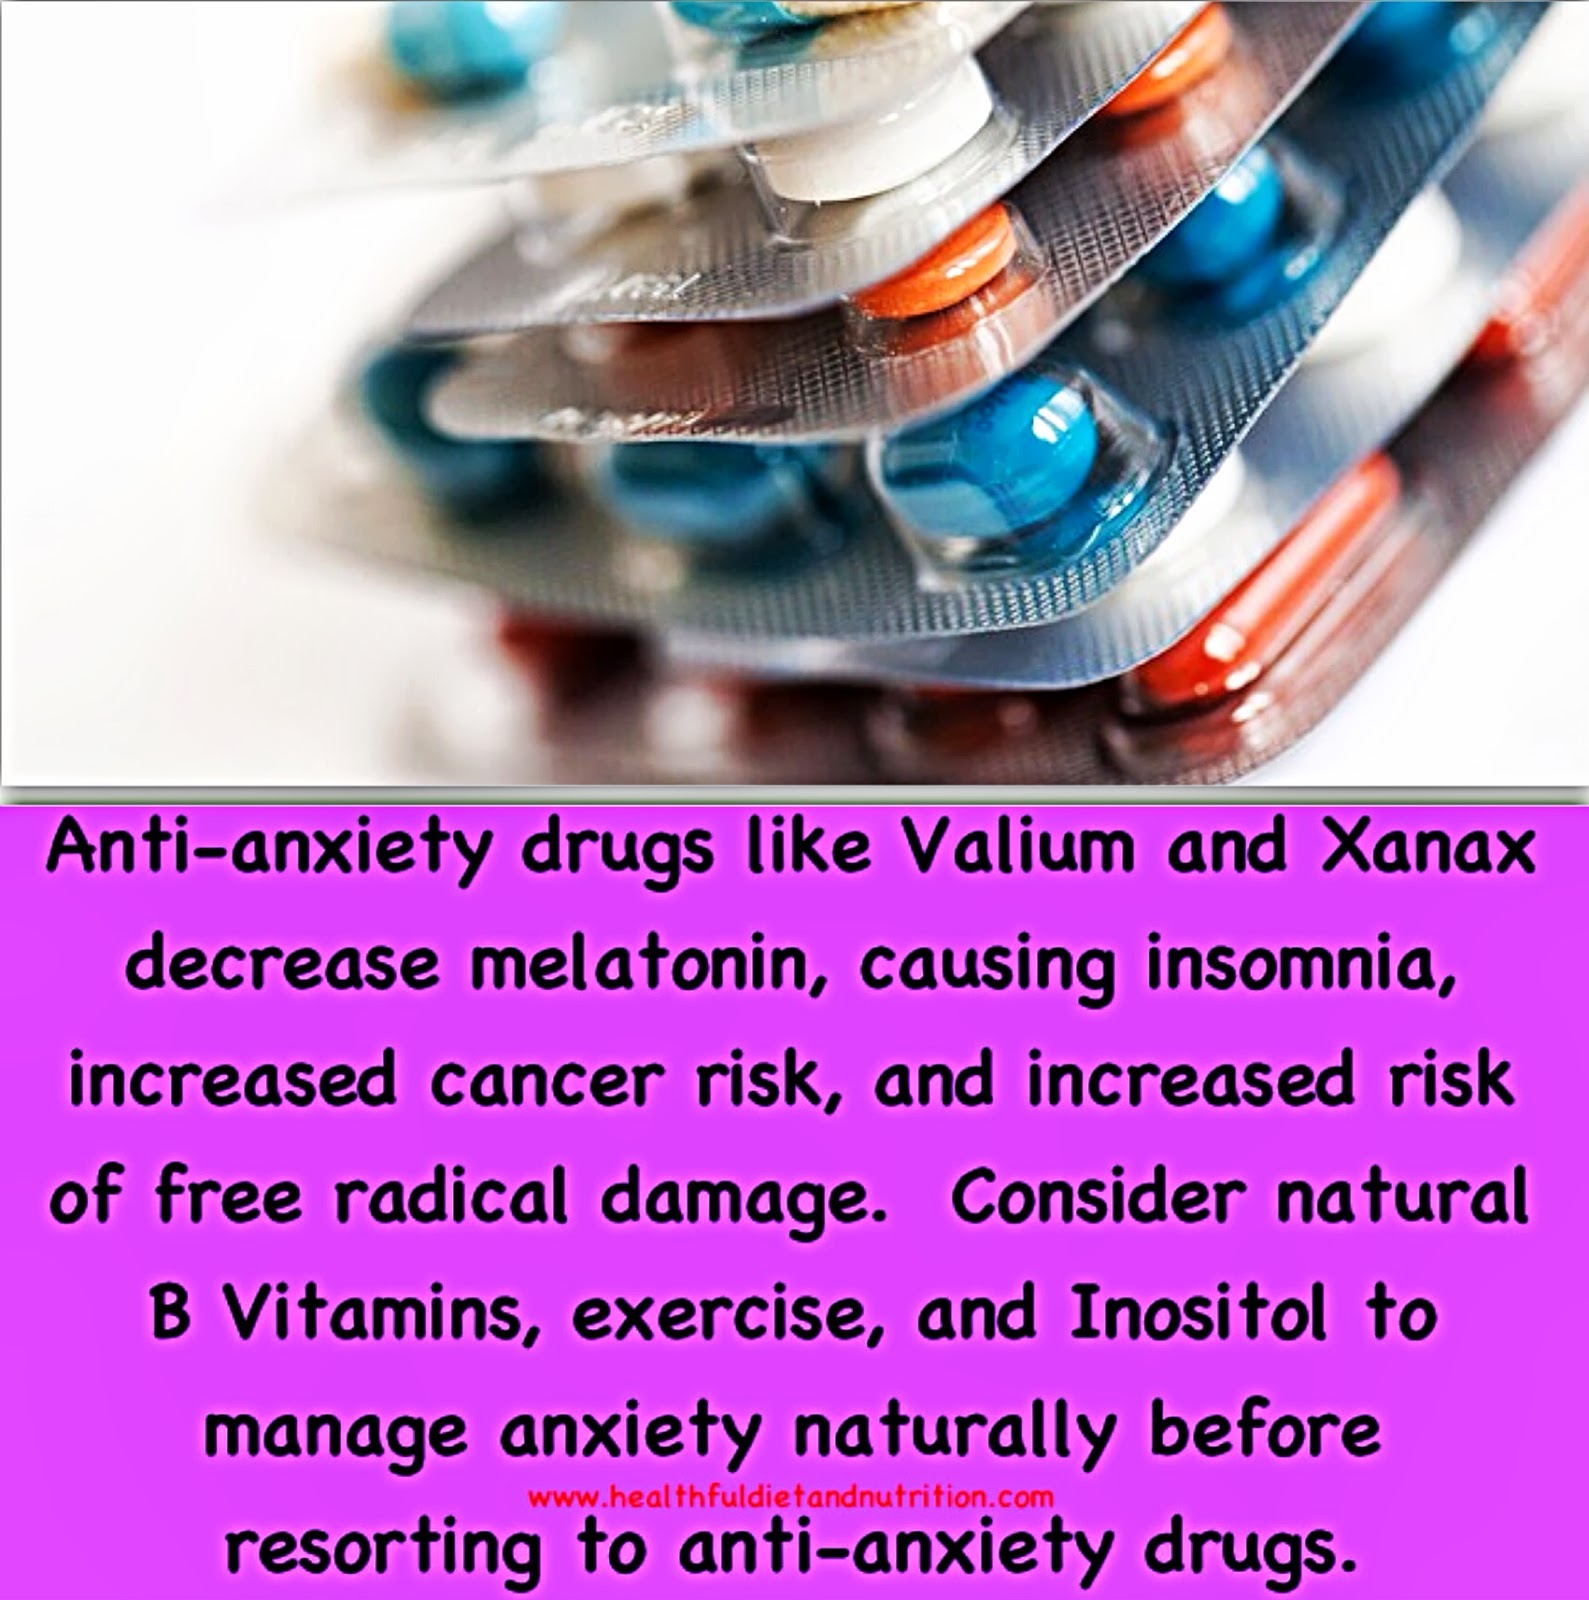 Consider Natural B Vitamins to Manage Anxiety